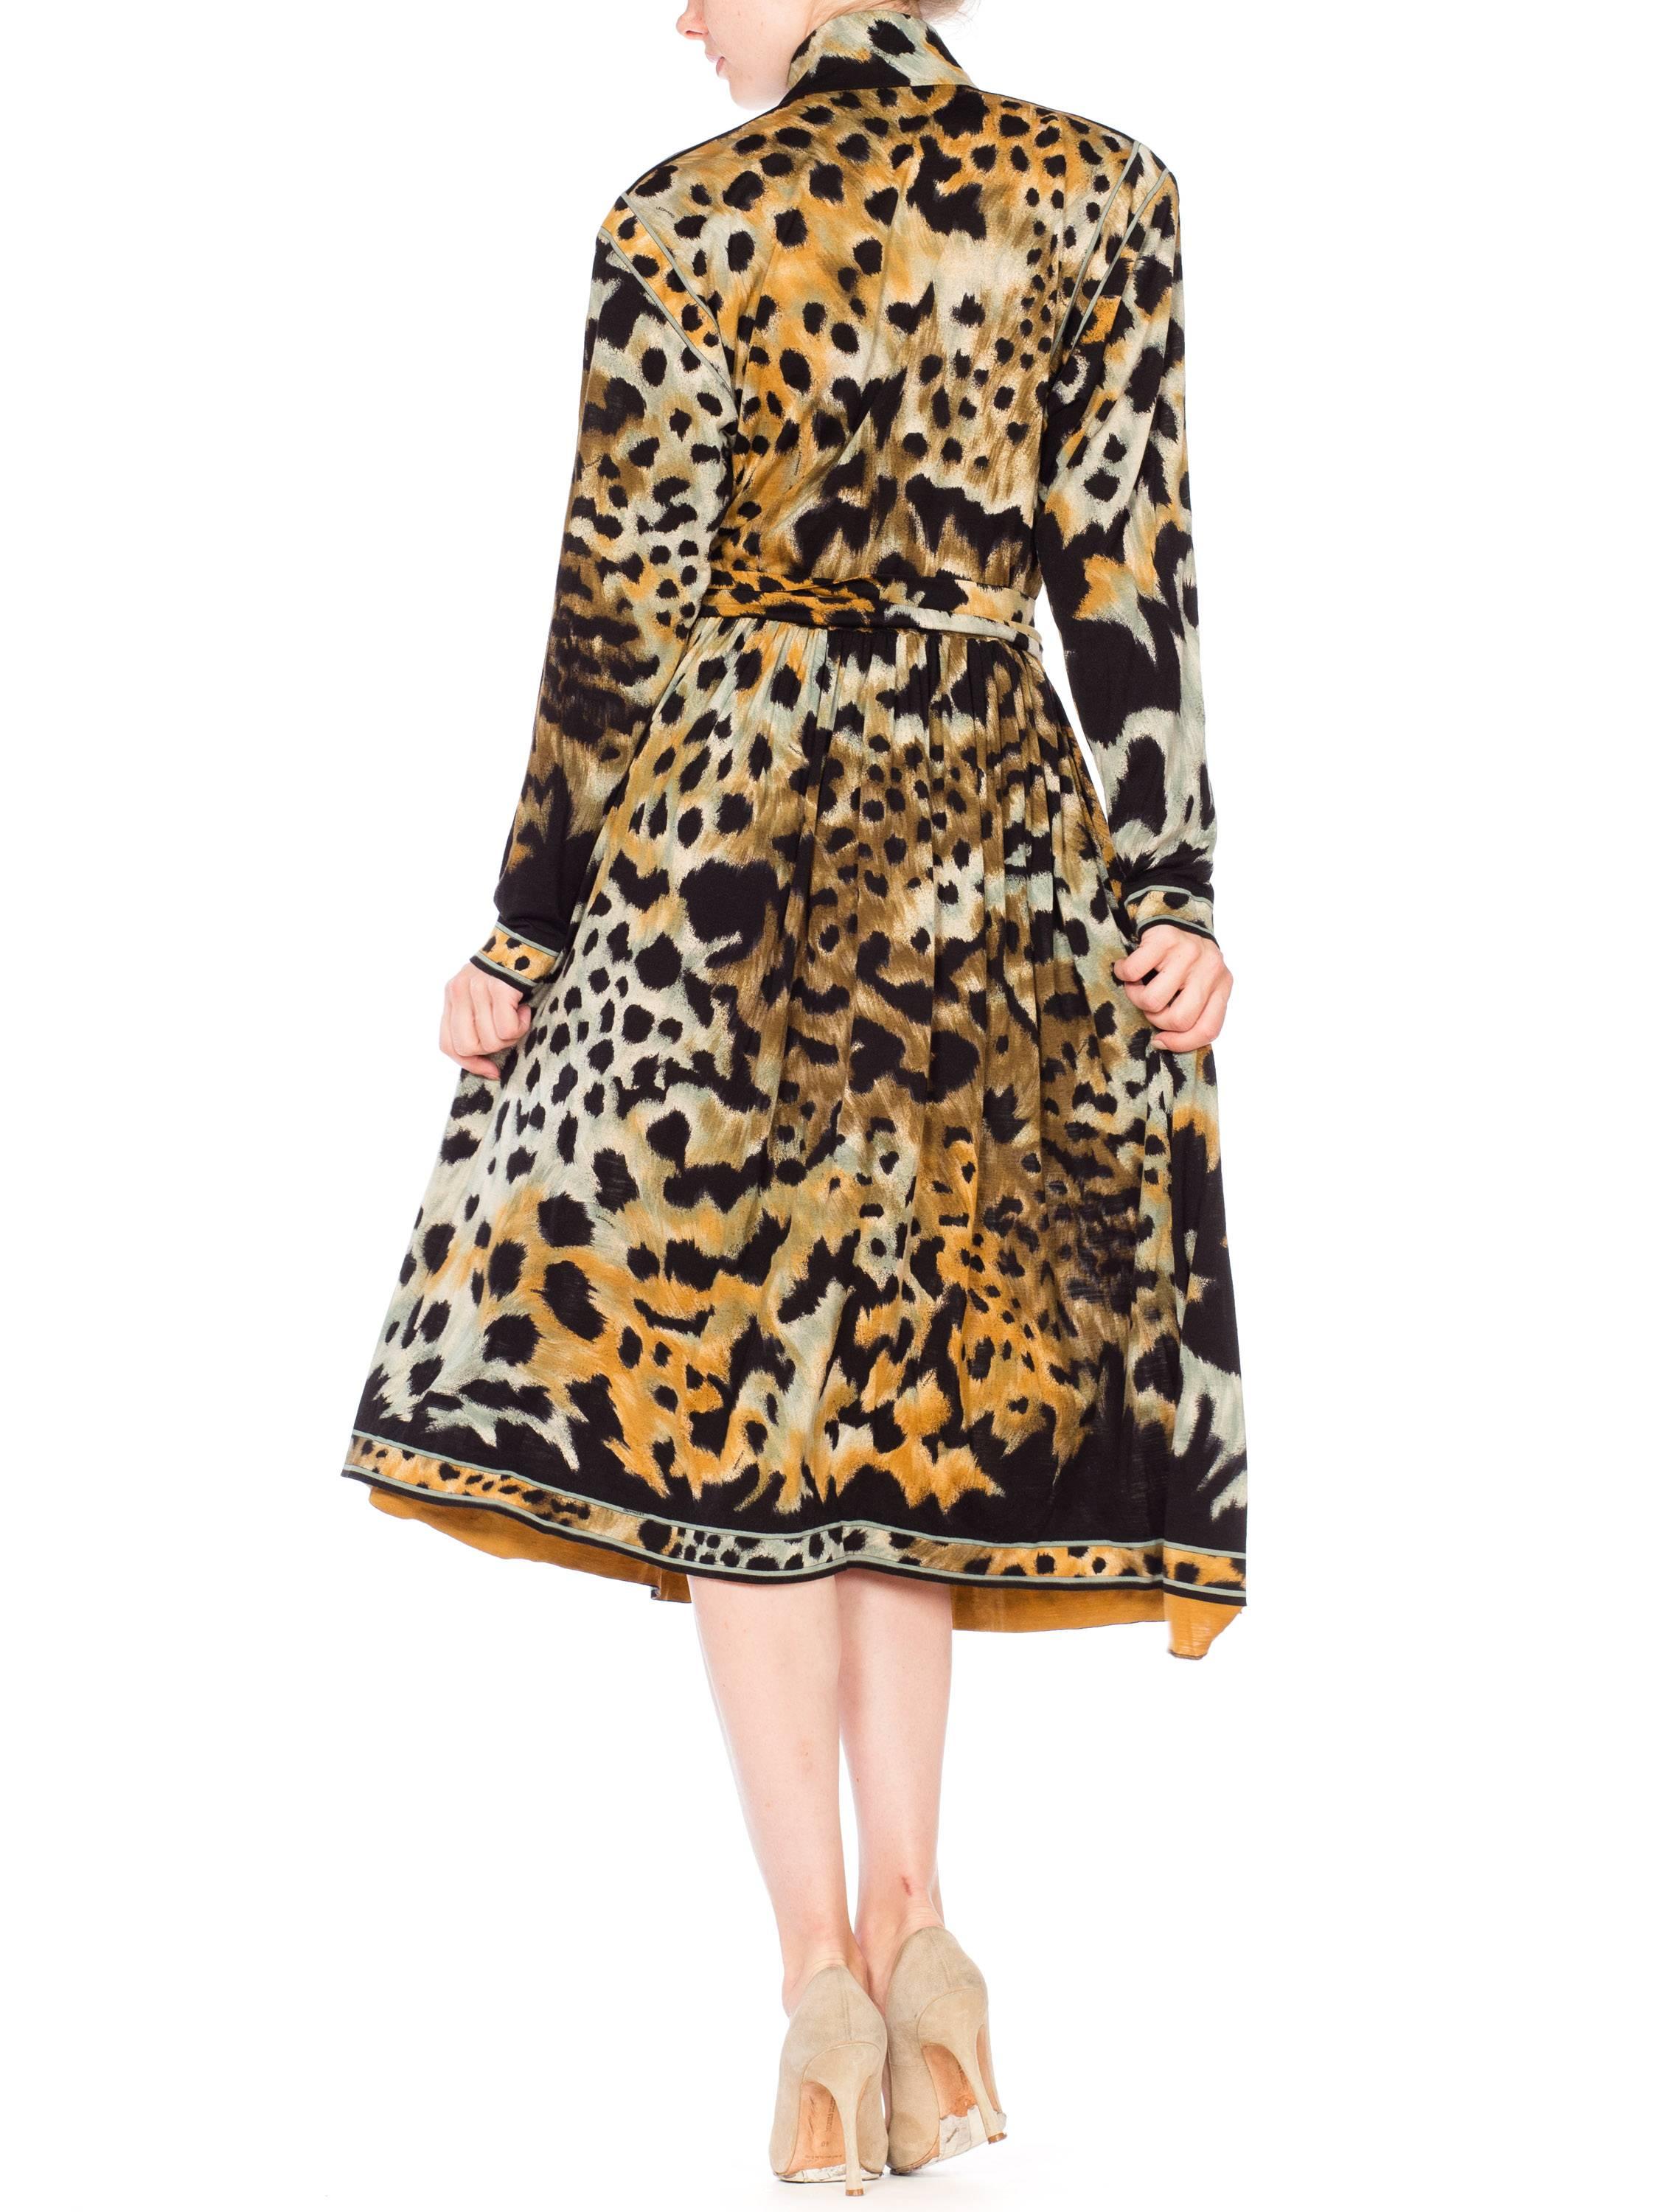 Leopard Print Leonard French Jersey Dress 3